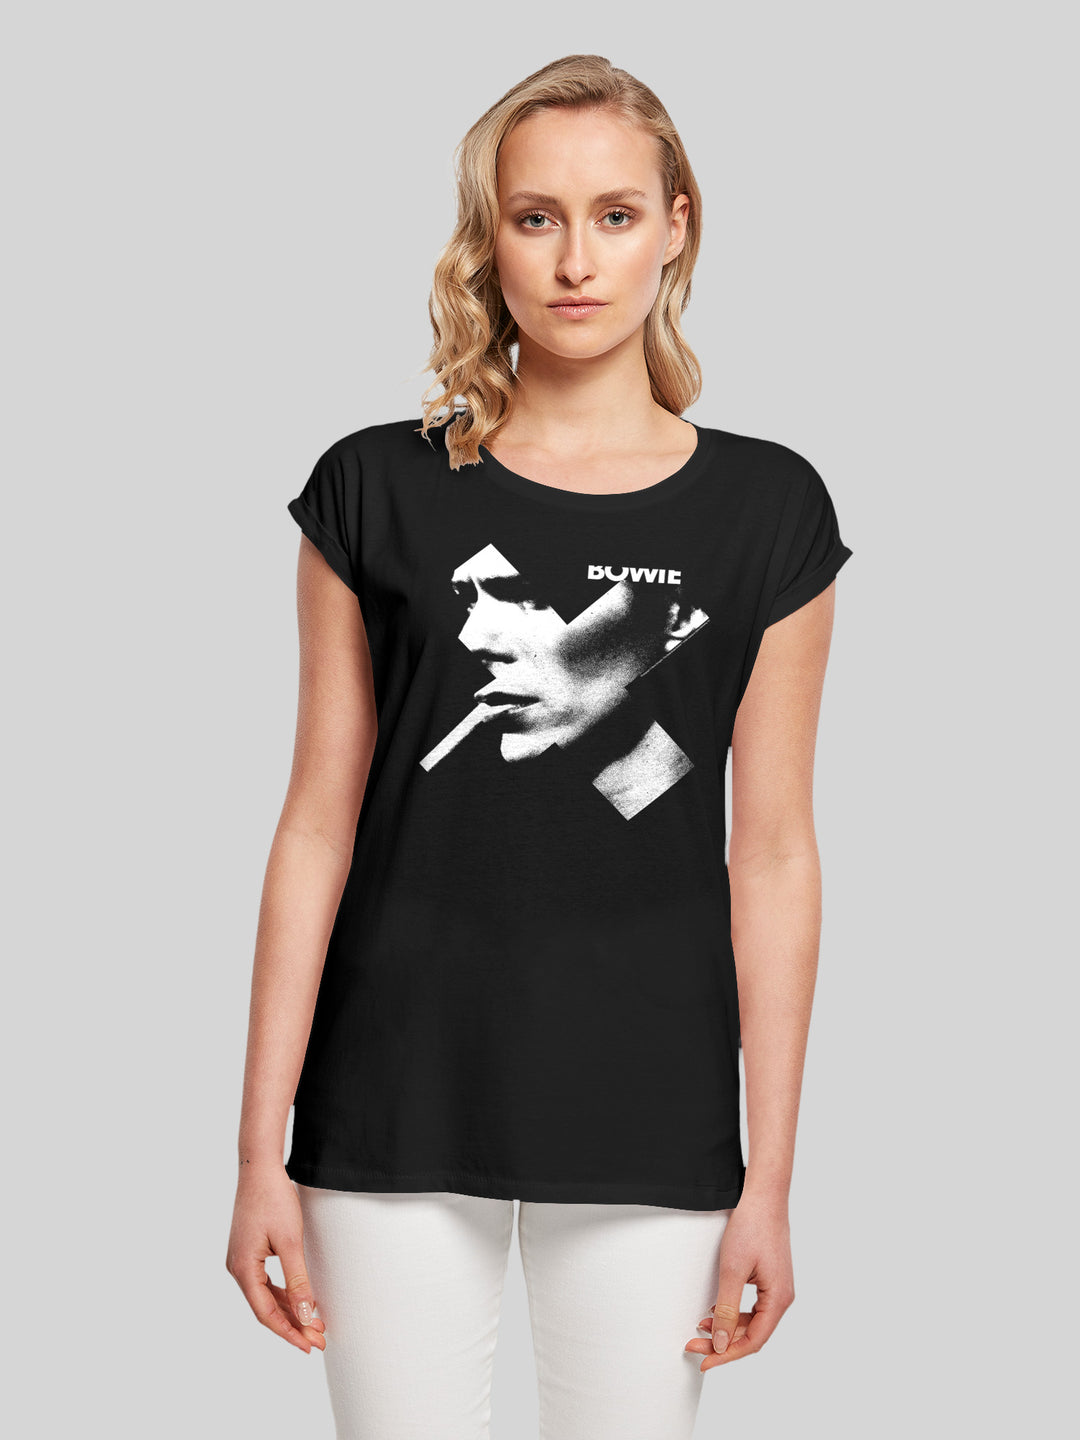 David Bowie T-Shirt | Cross Smoke | Premium Short Sleeve Ladies Tee